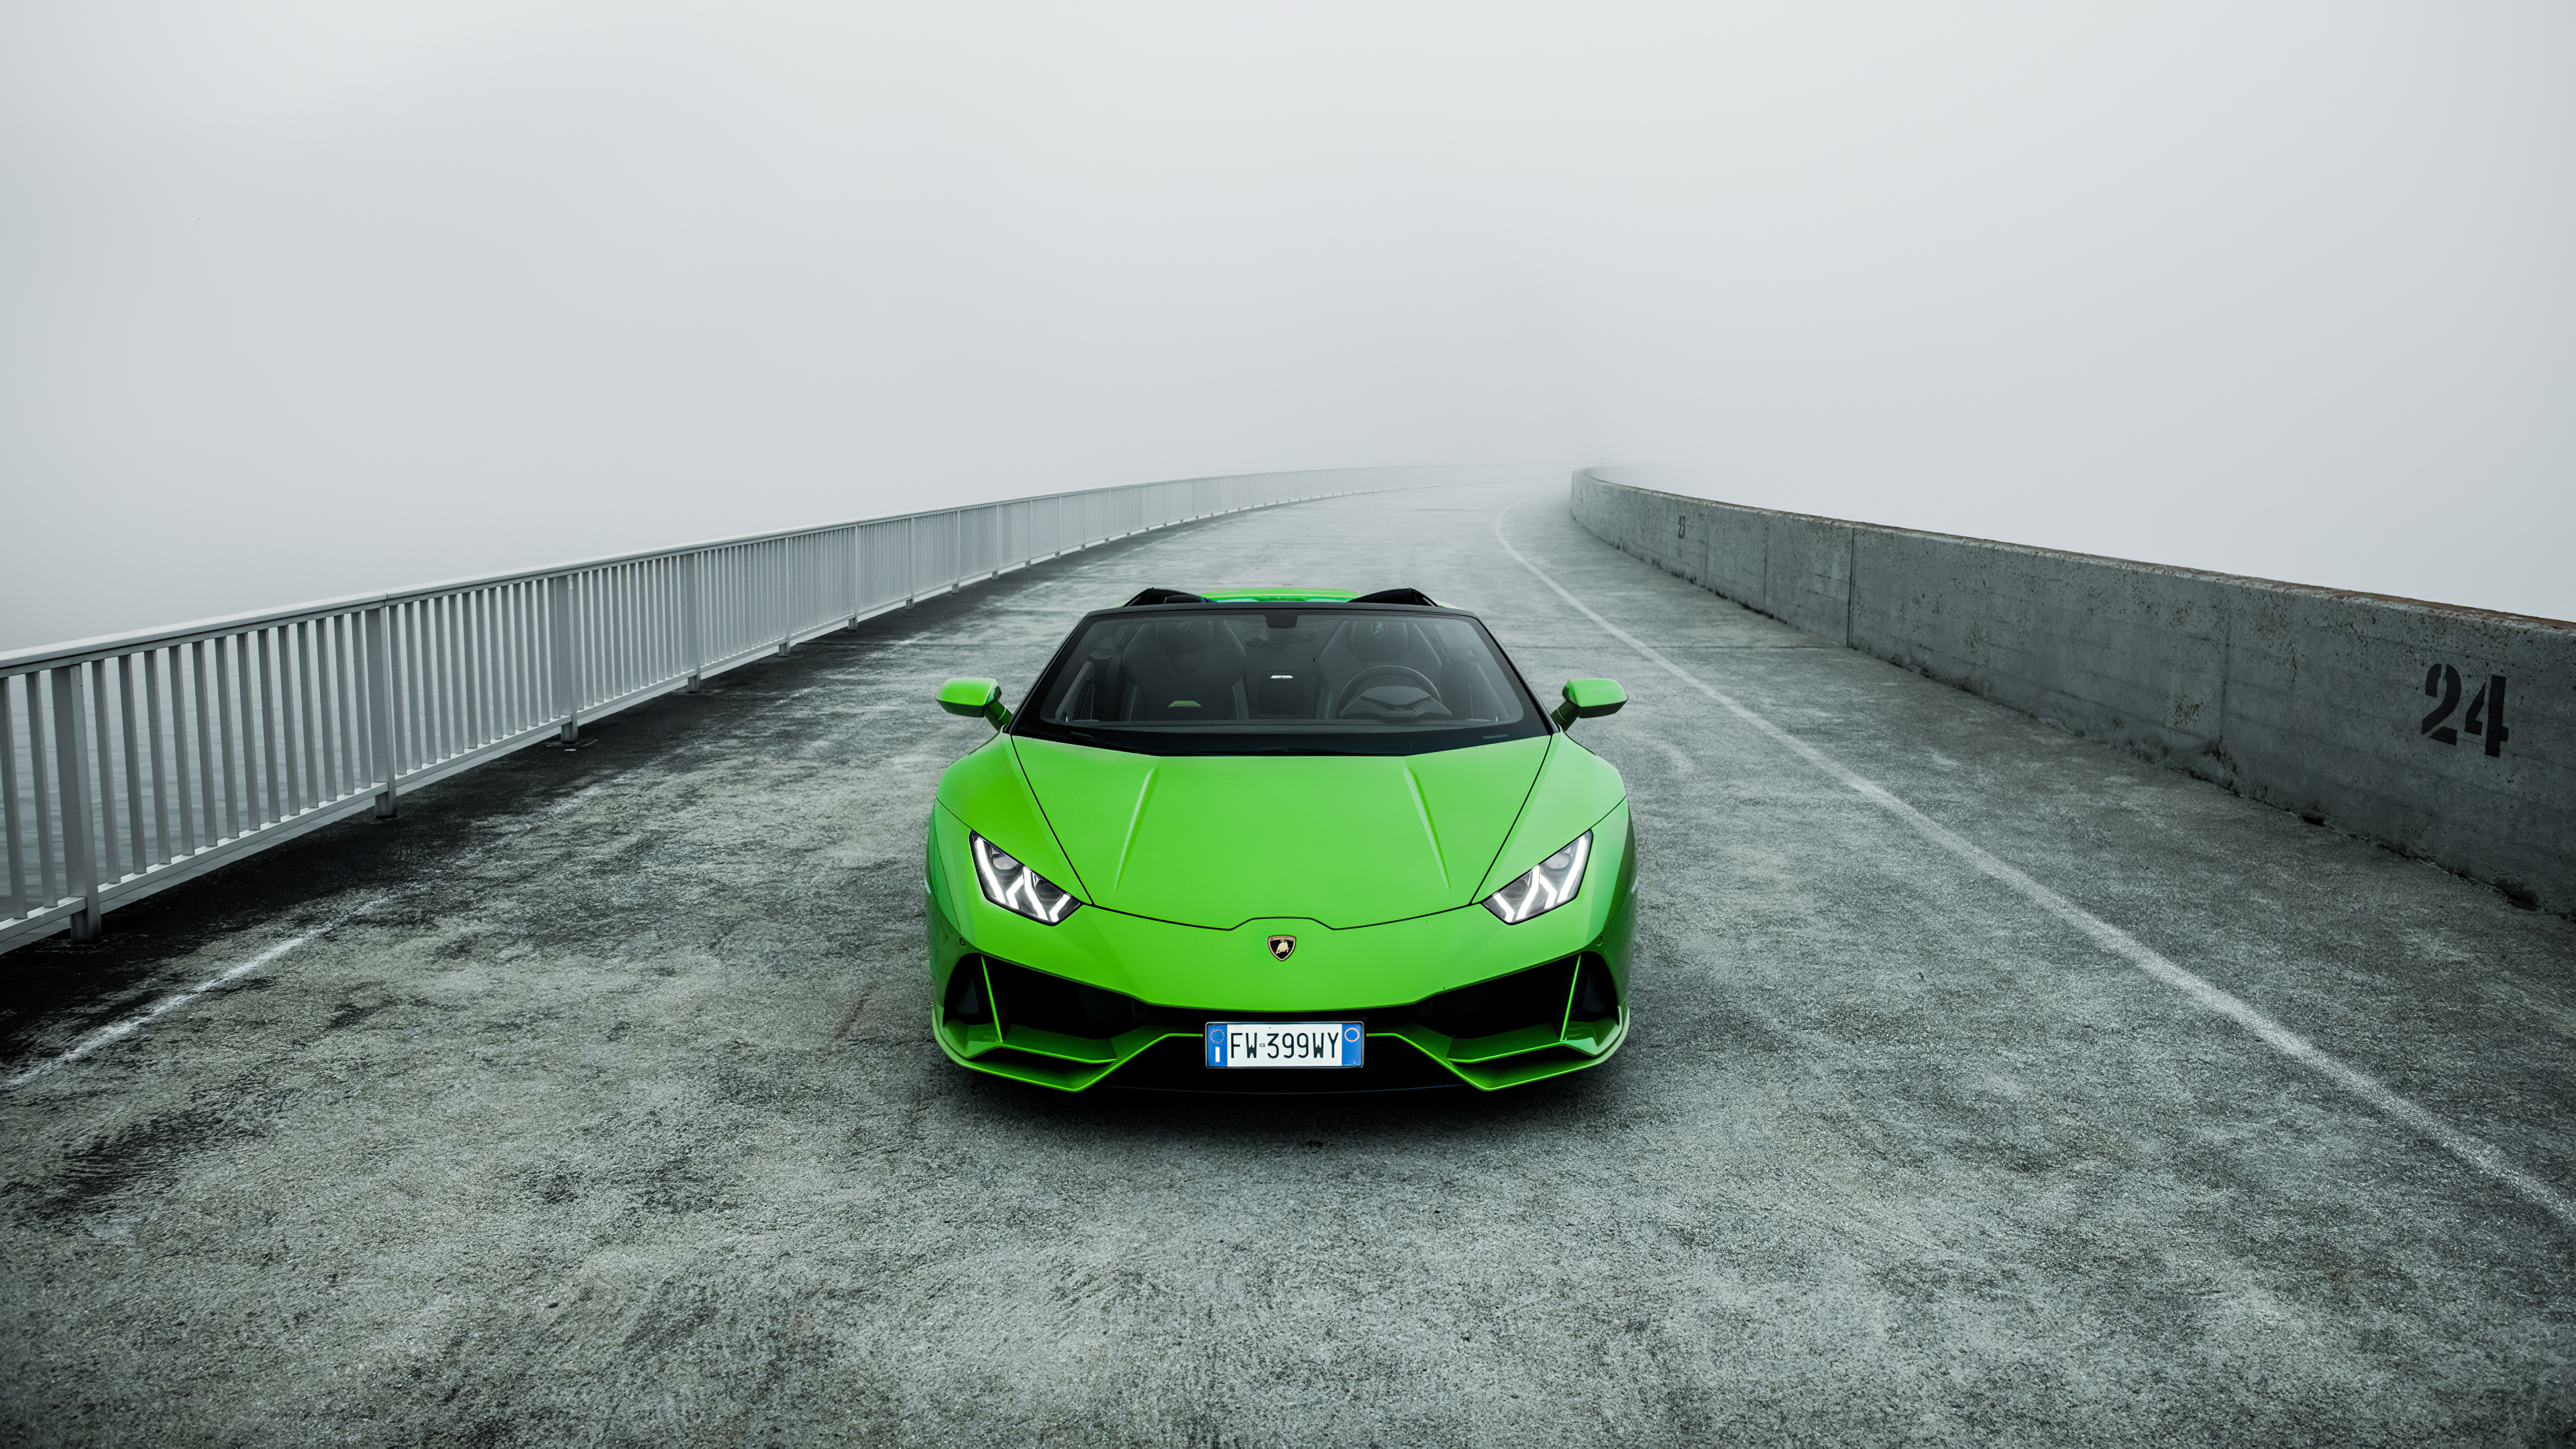 Wallpaper Green Lamborghini Aventador on Gray Asphalt Road, Background -  Download Free Image